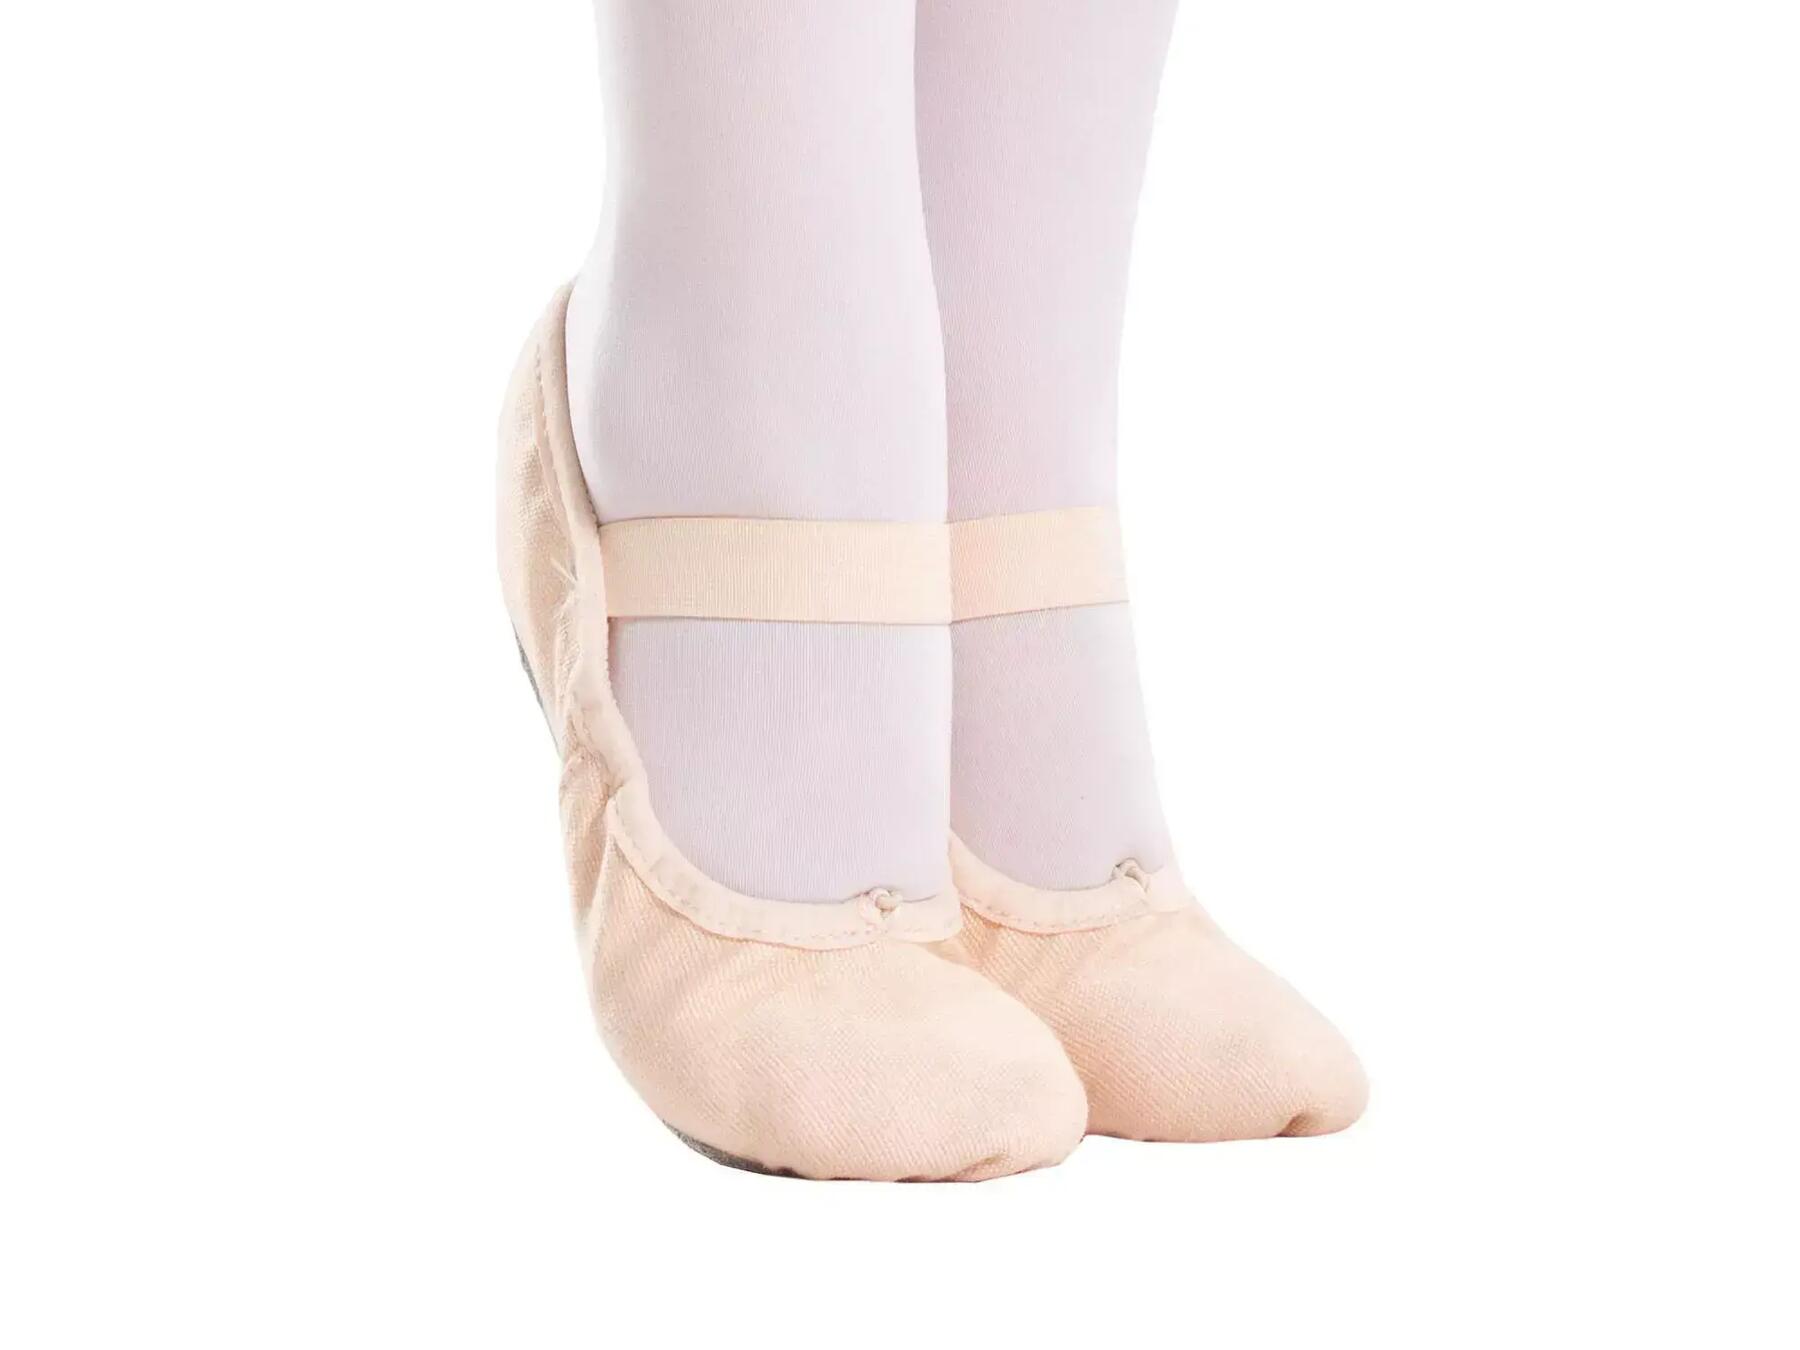 Hoe kies ik balletschoenen of spitzen?